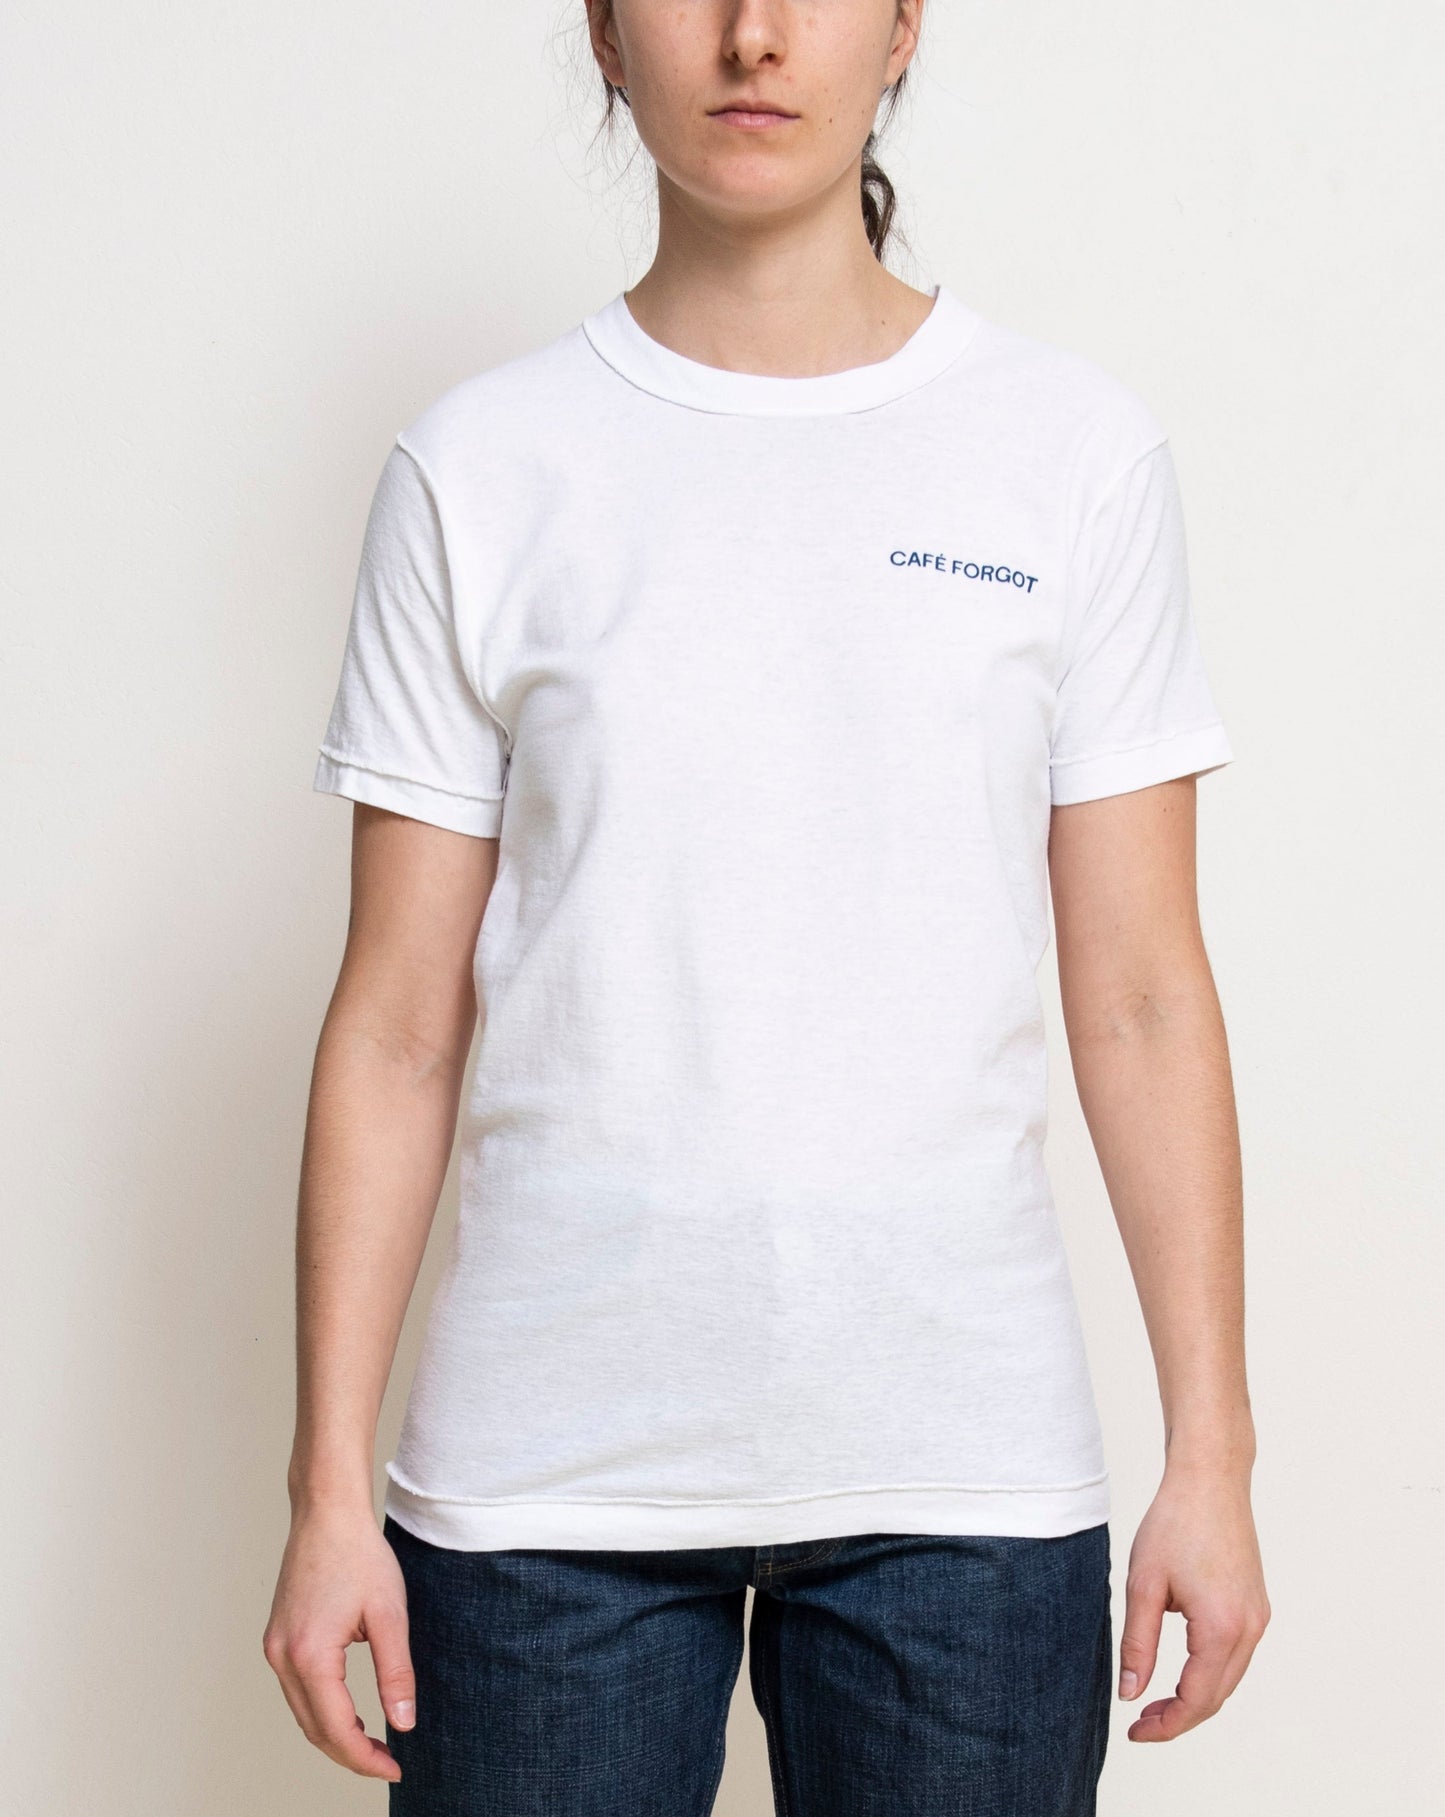 Café Forgot - White CF T-shirt with Navy Print